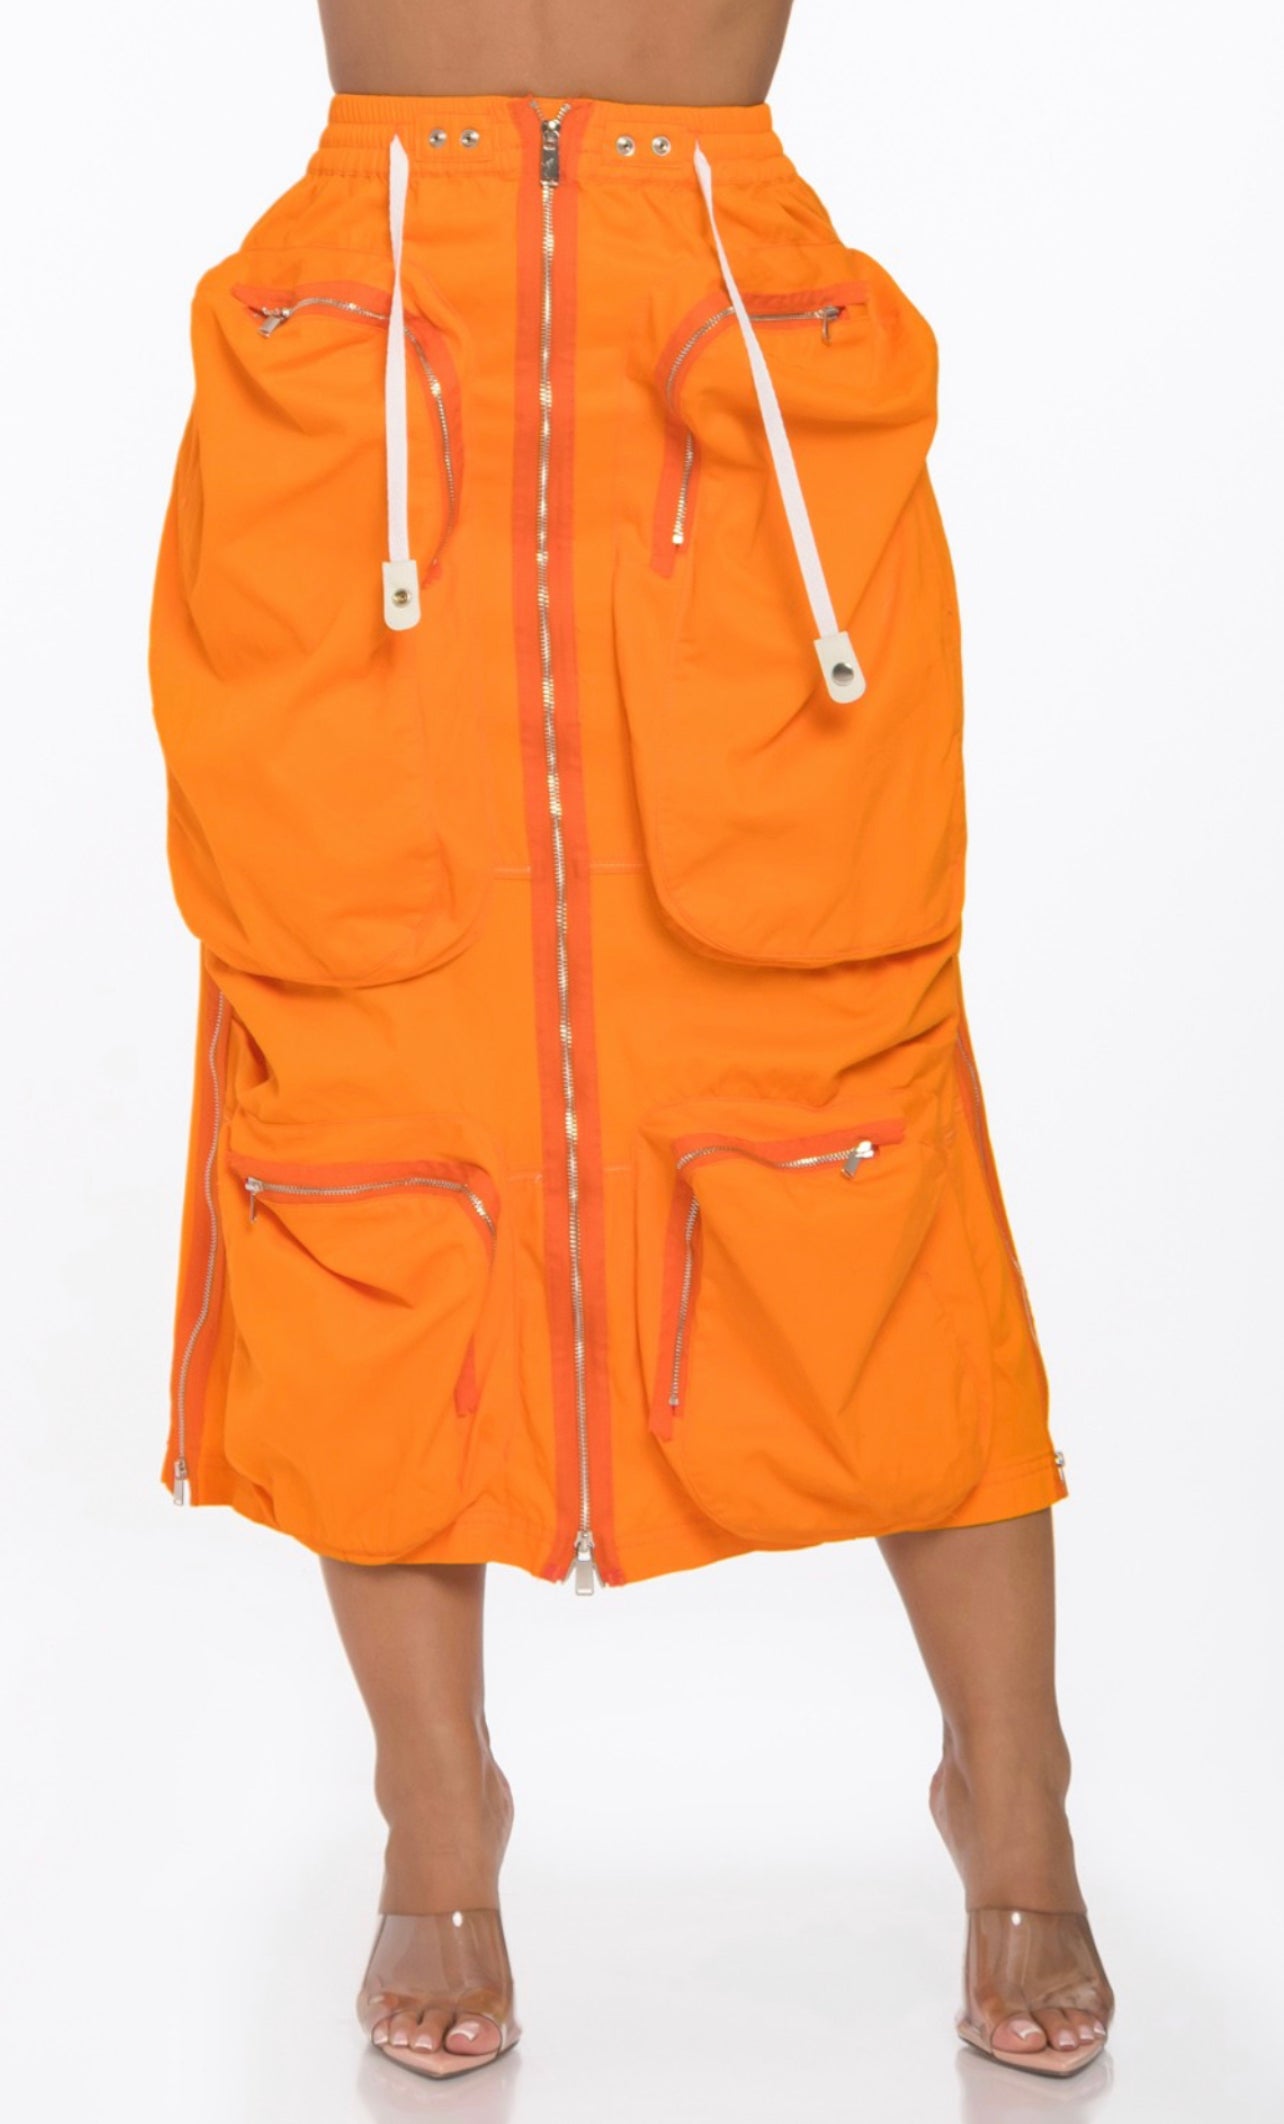 Orange Is The New Skirt